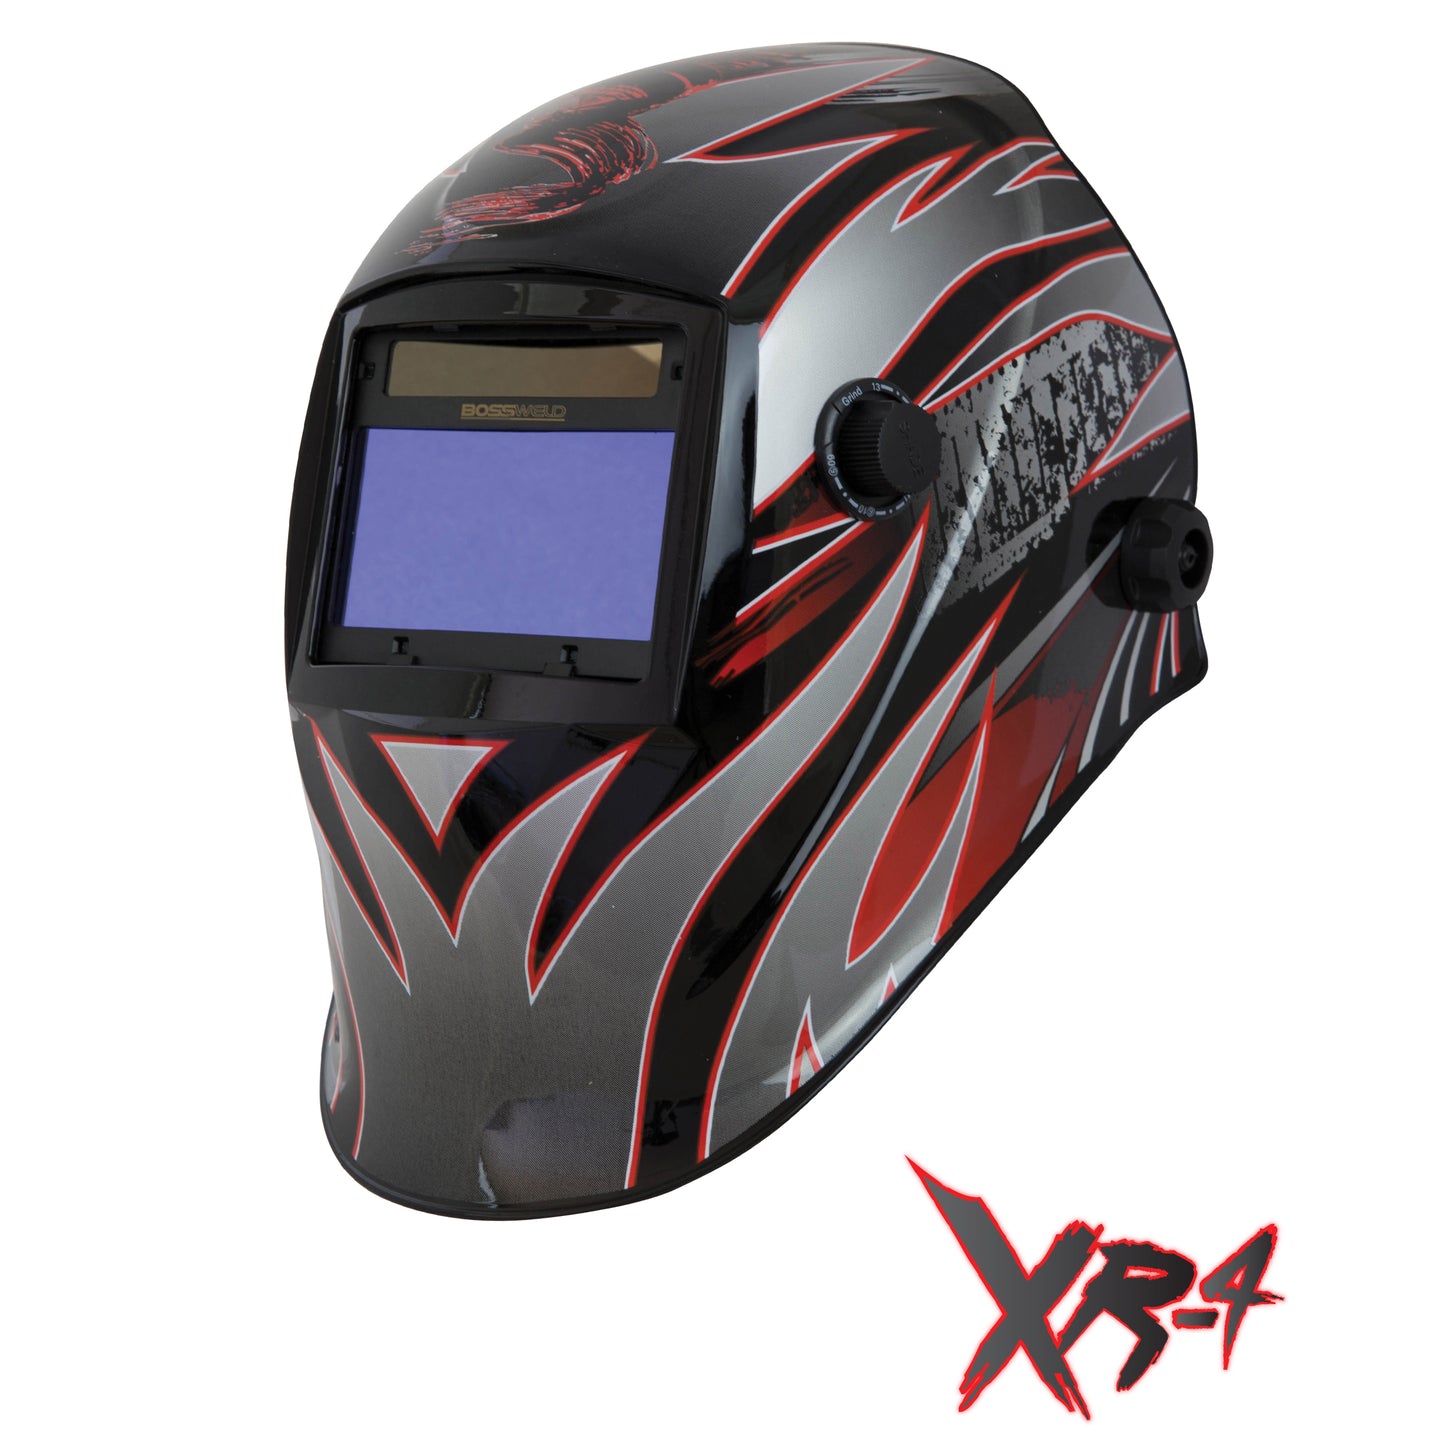 BOSSWELD X-Sight Series Electronic Welding Helmet